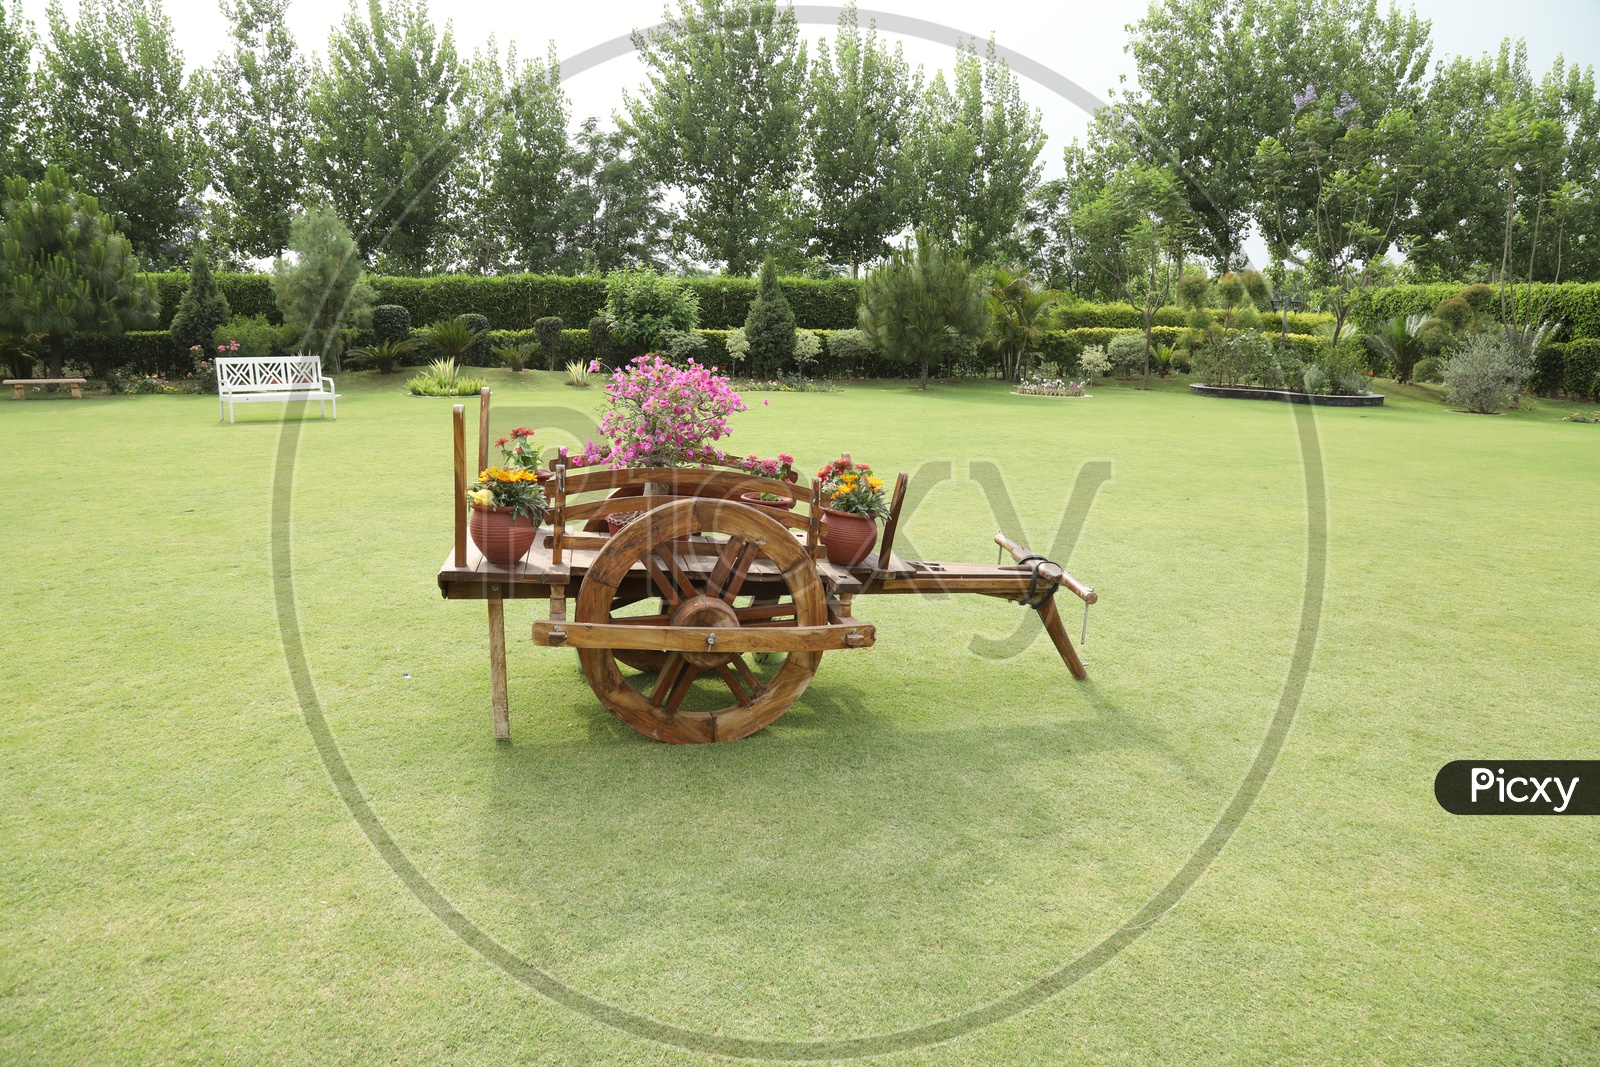 A Model Bullock Cart in a  lawn With Flower pots